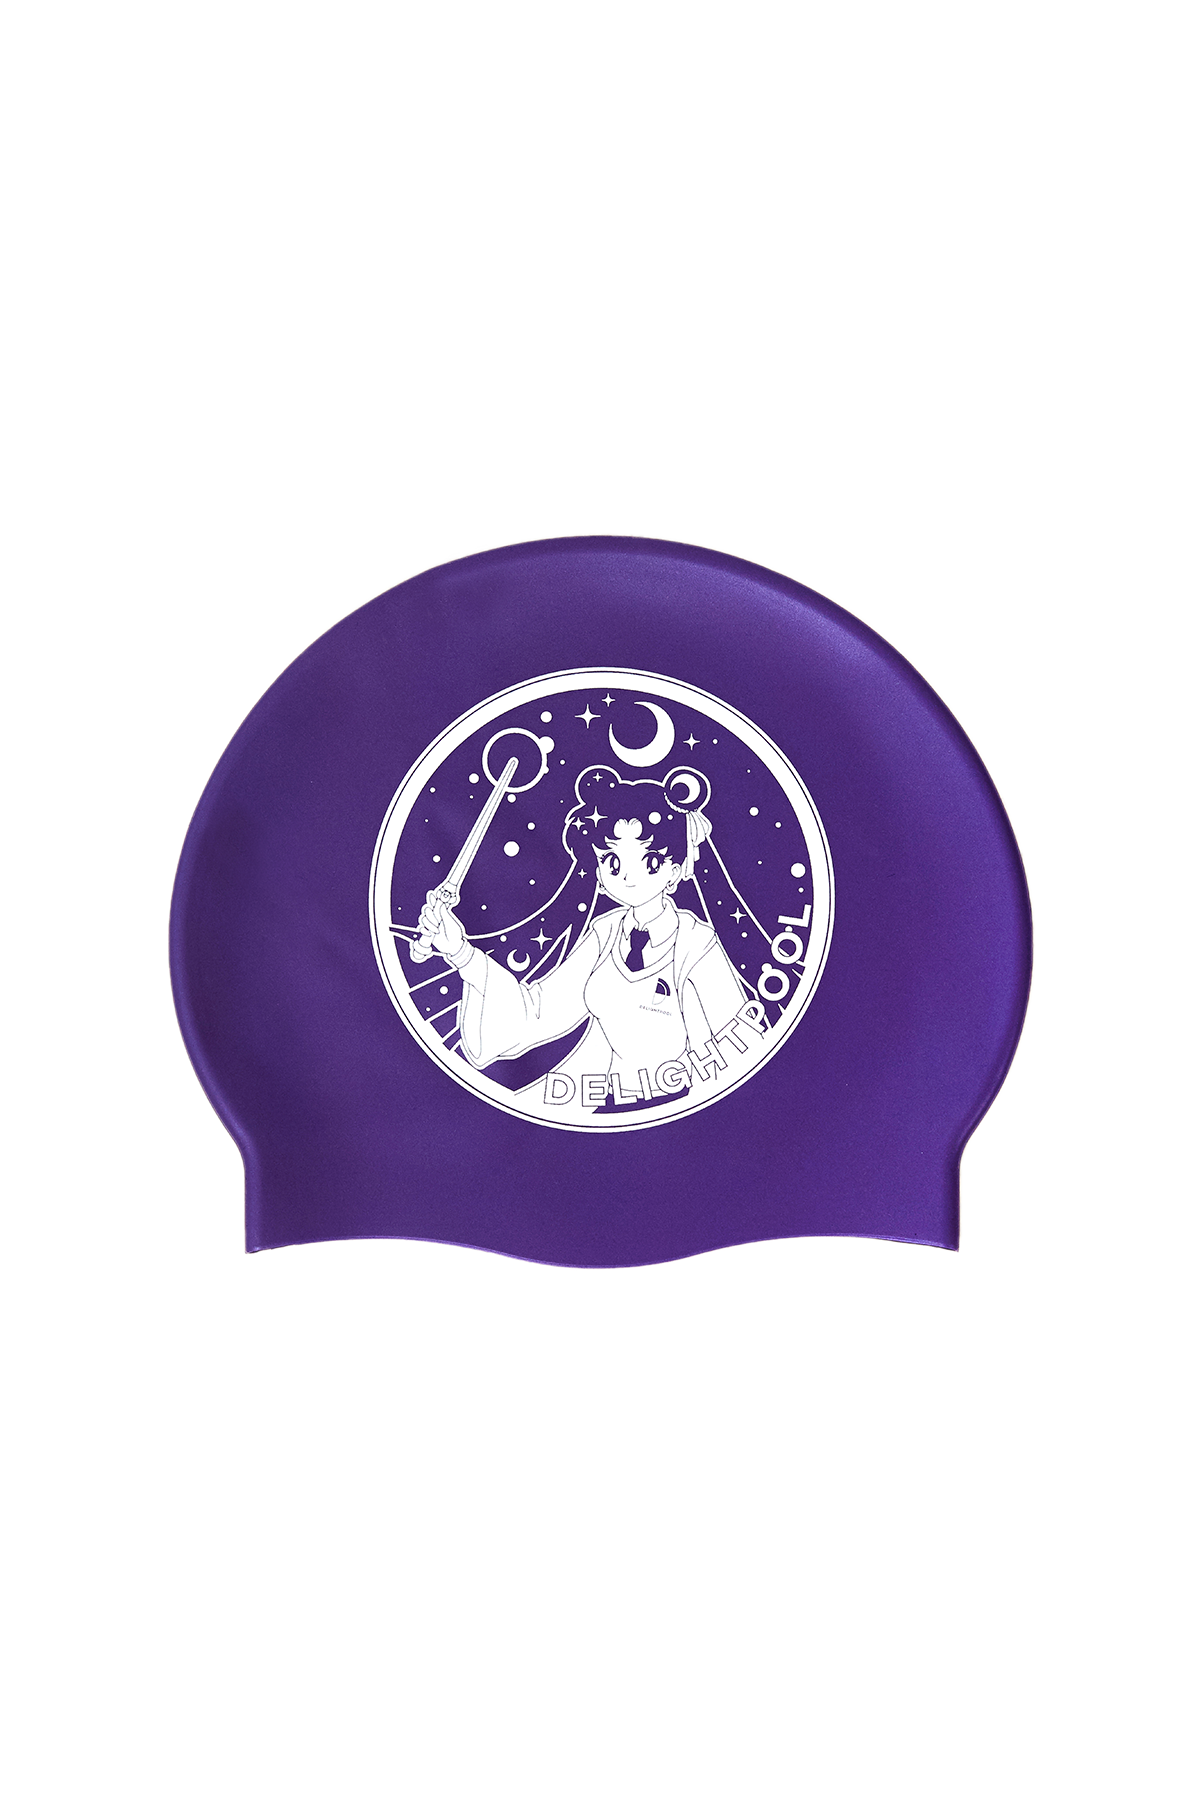 Moon Crystal Power swim cap - Twinkle purple